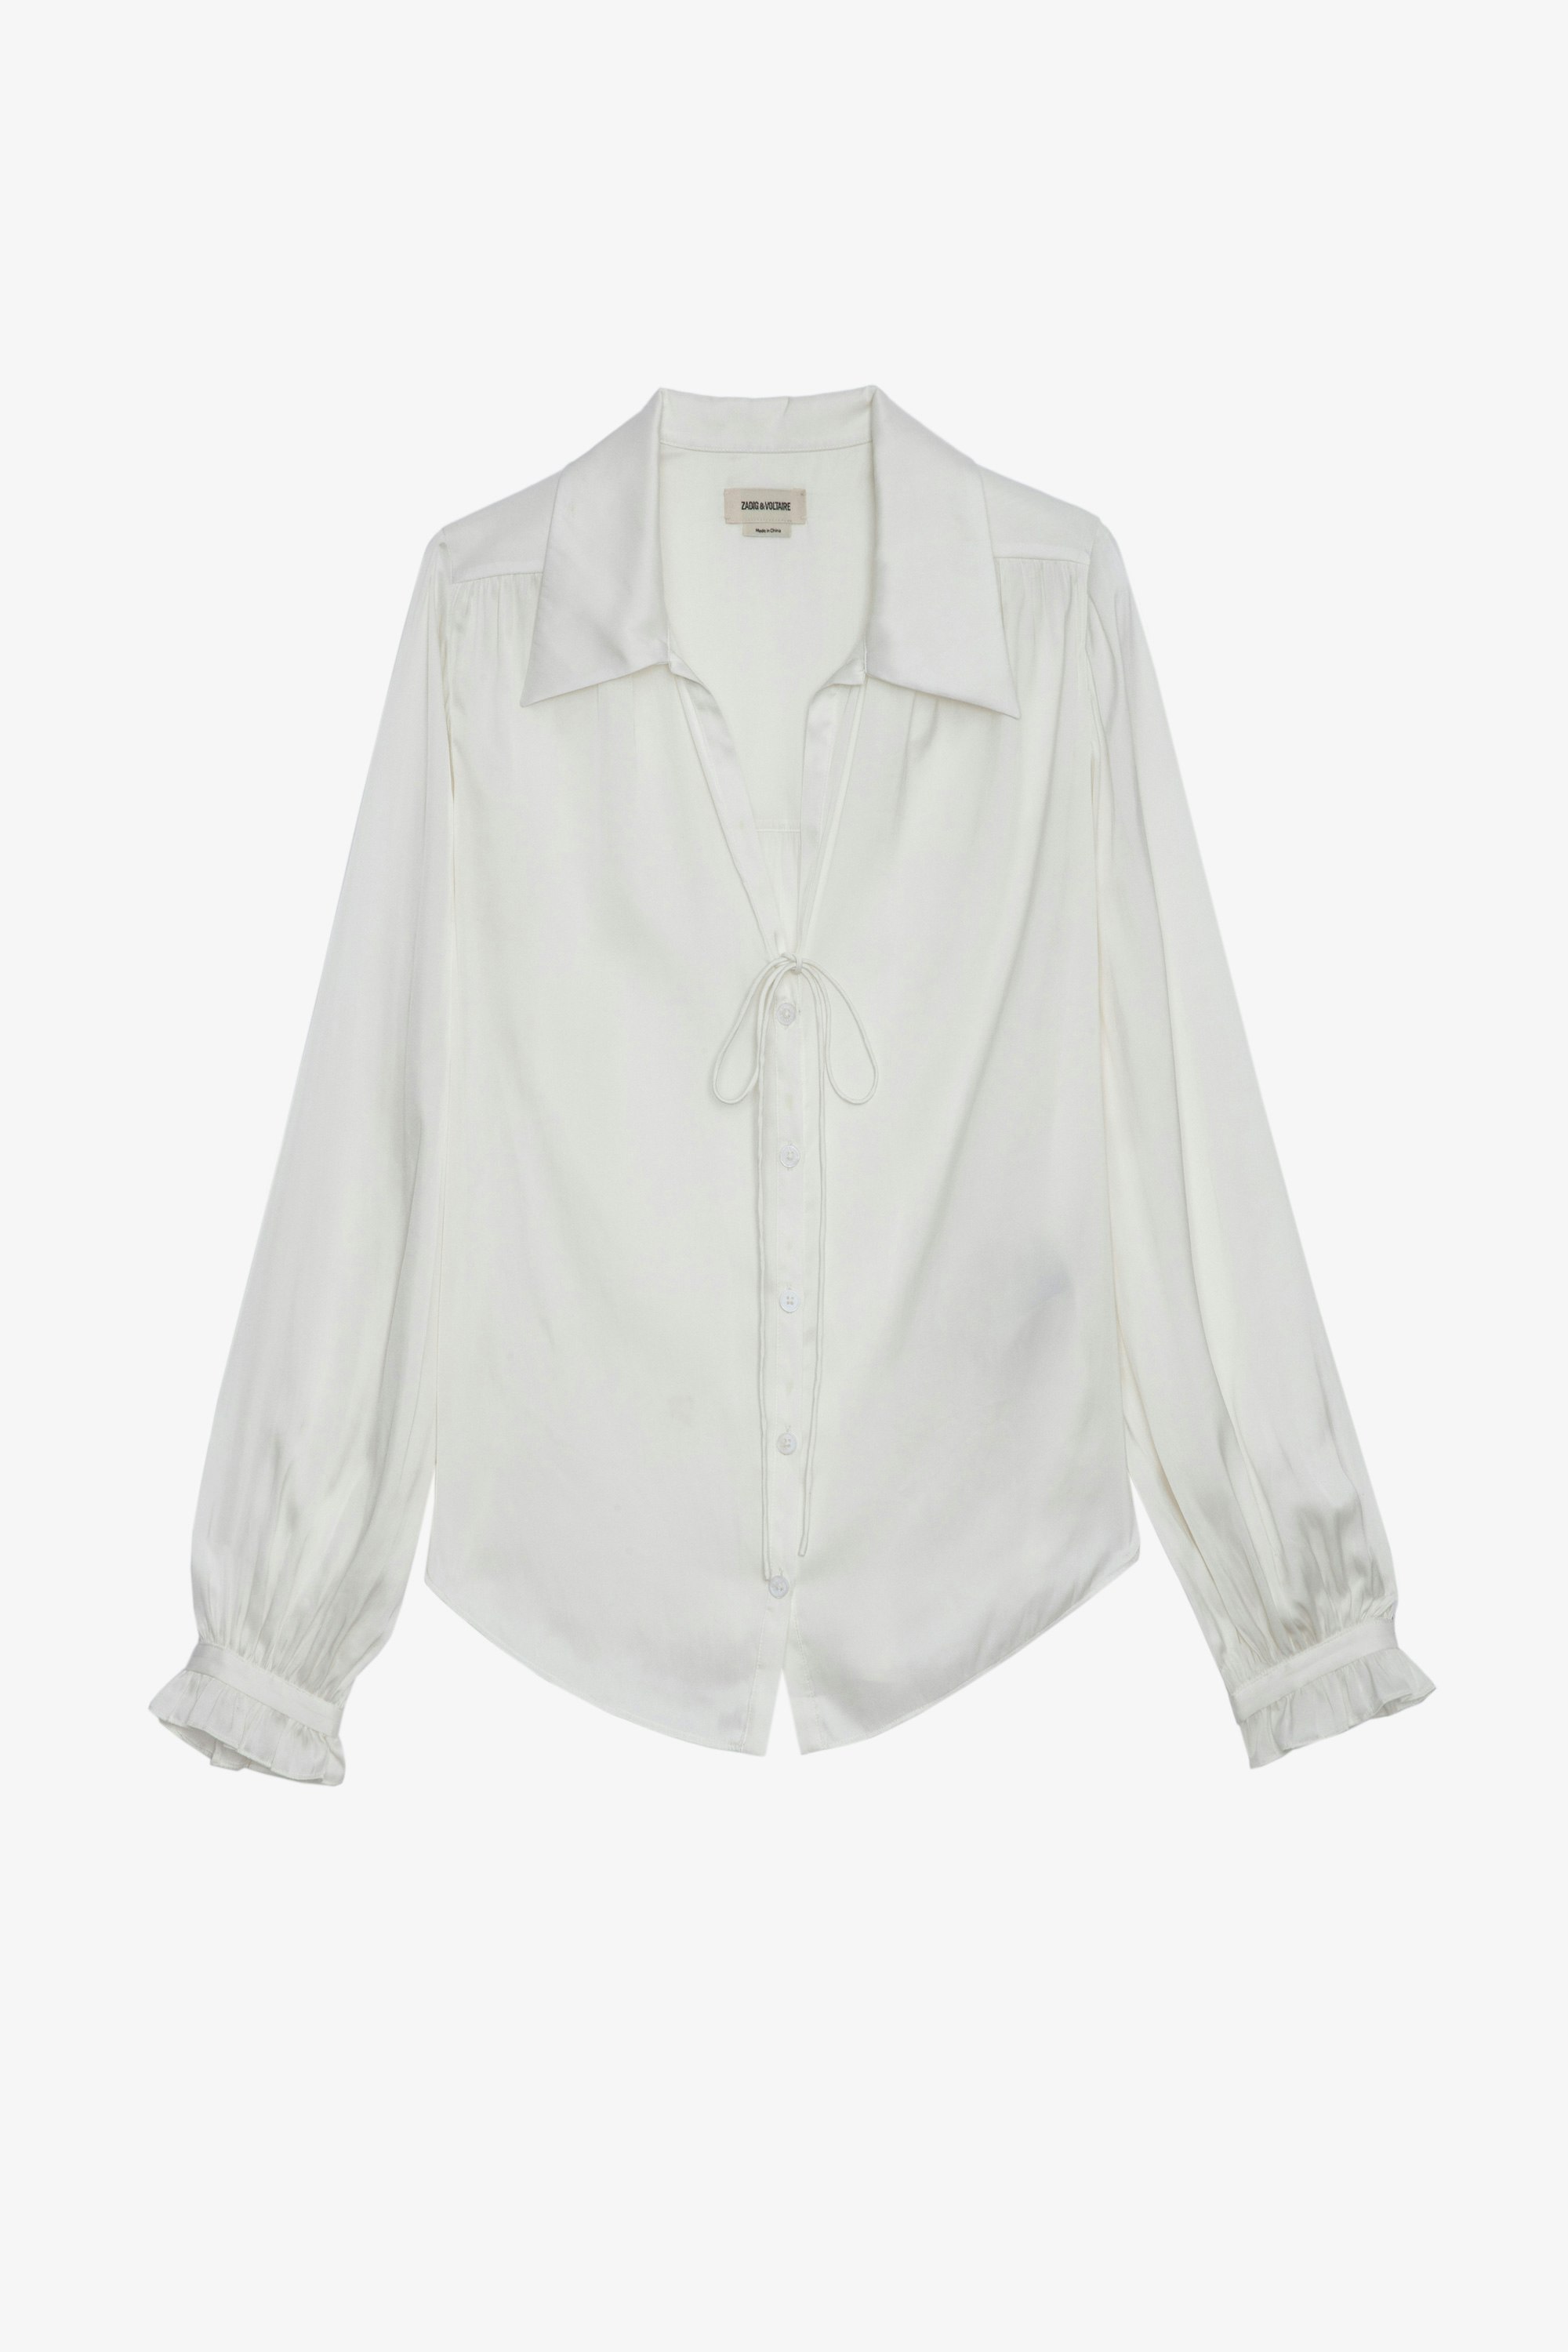 Tilan Satin Shirt - Women's white blouse.